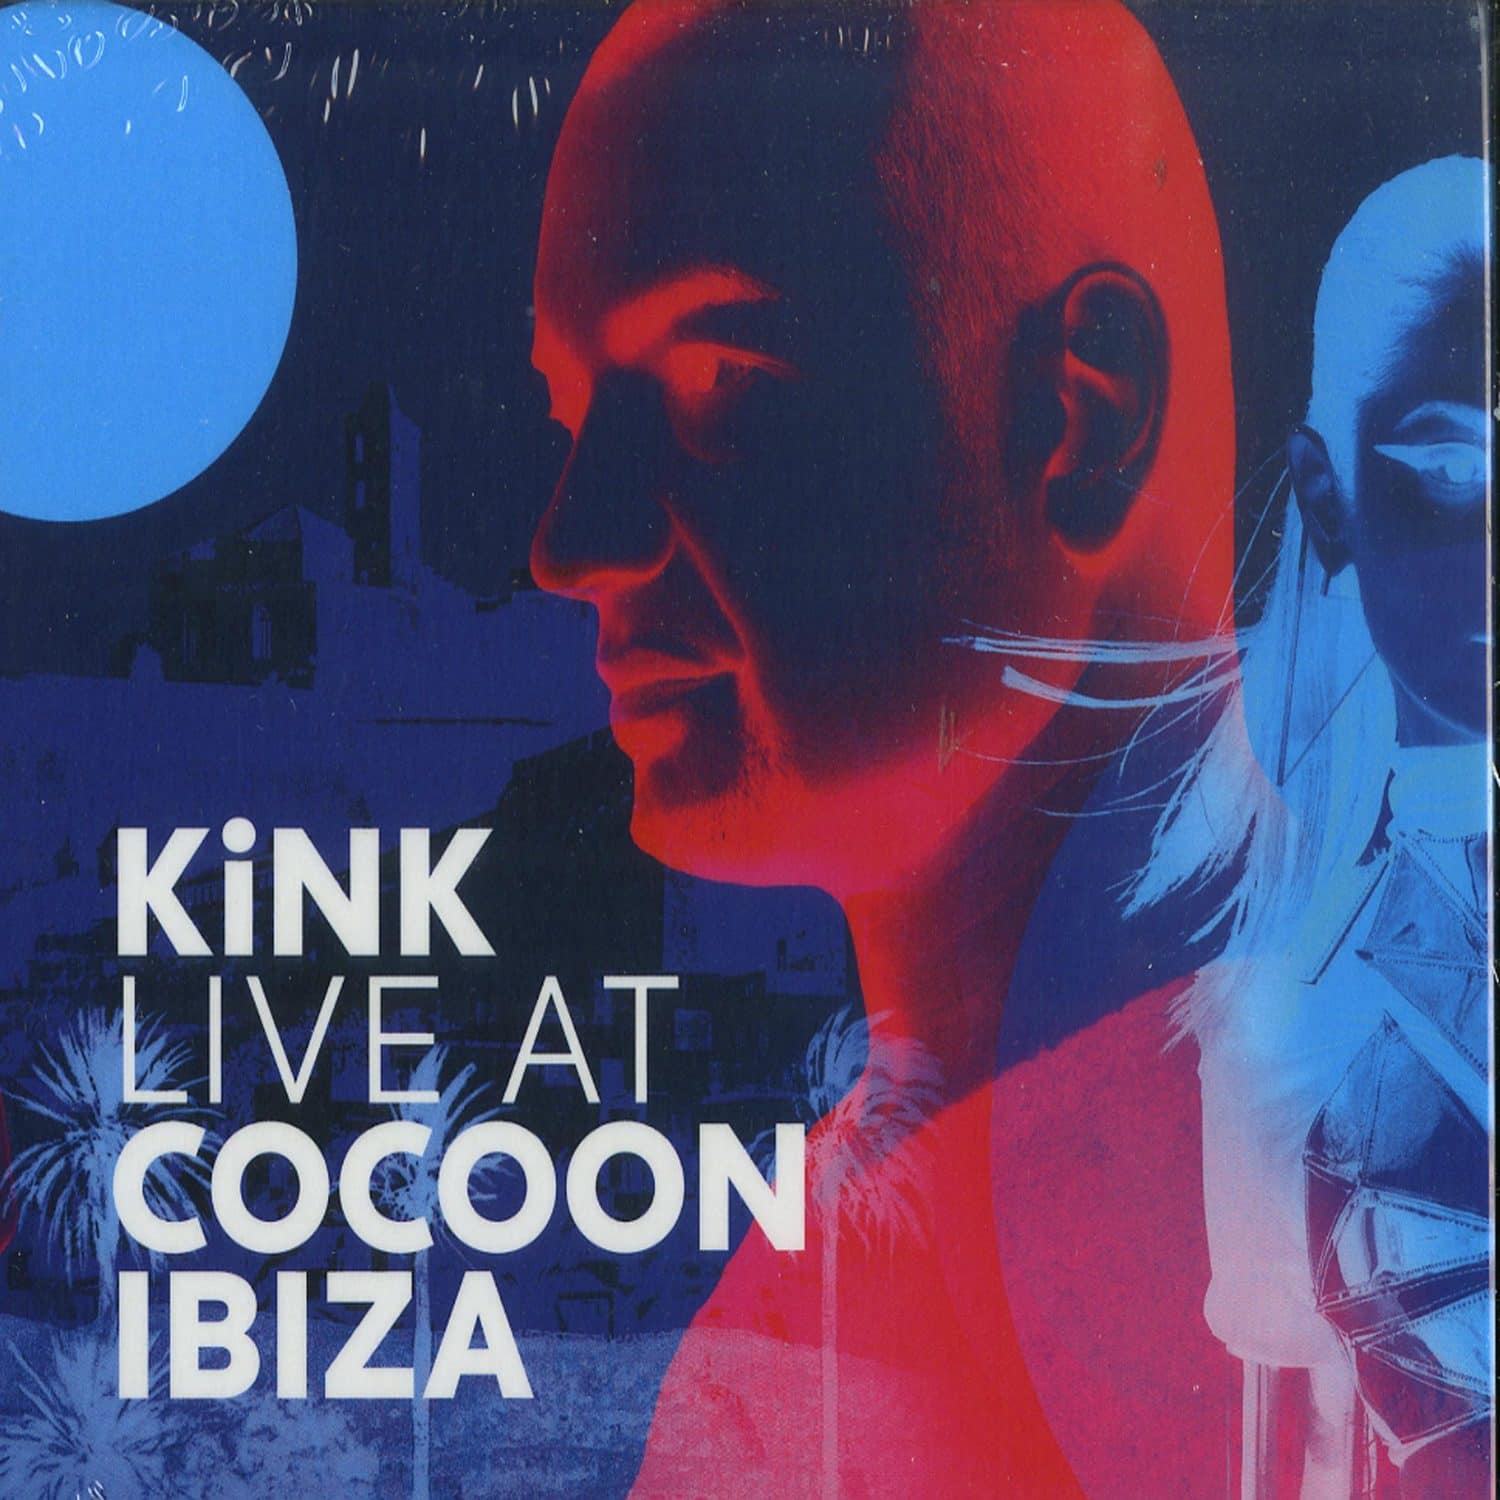 Kink - Live At Cocoon Ibiza 